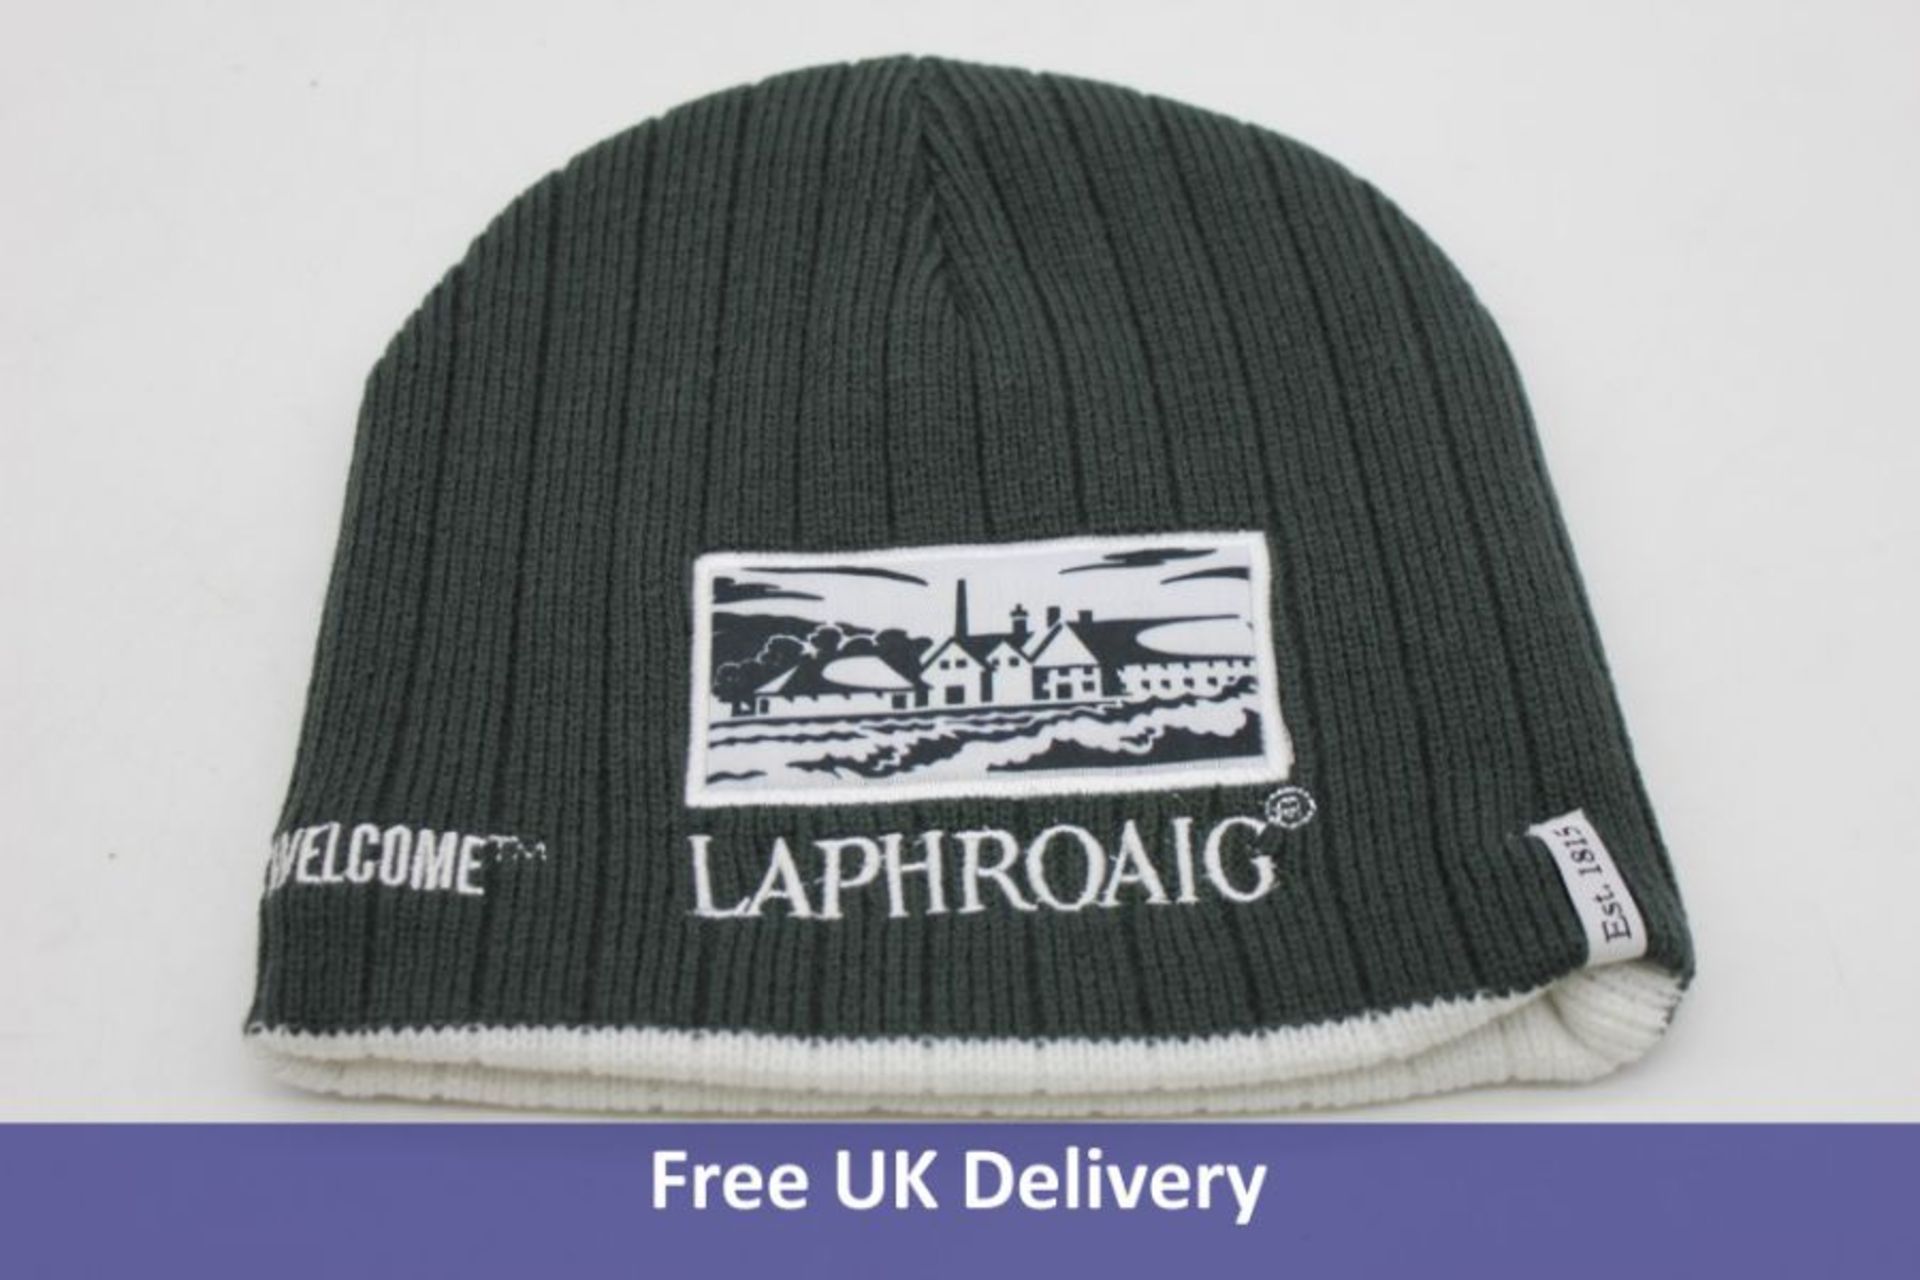 Ten Laphroig Beanie Hat, Charcoal, One Size